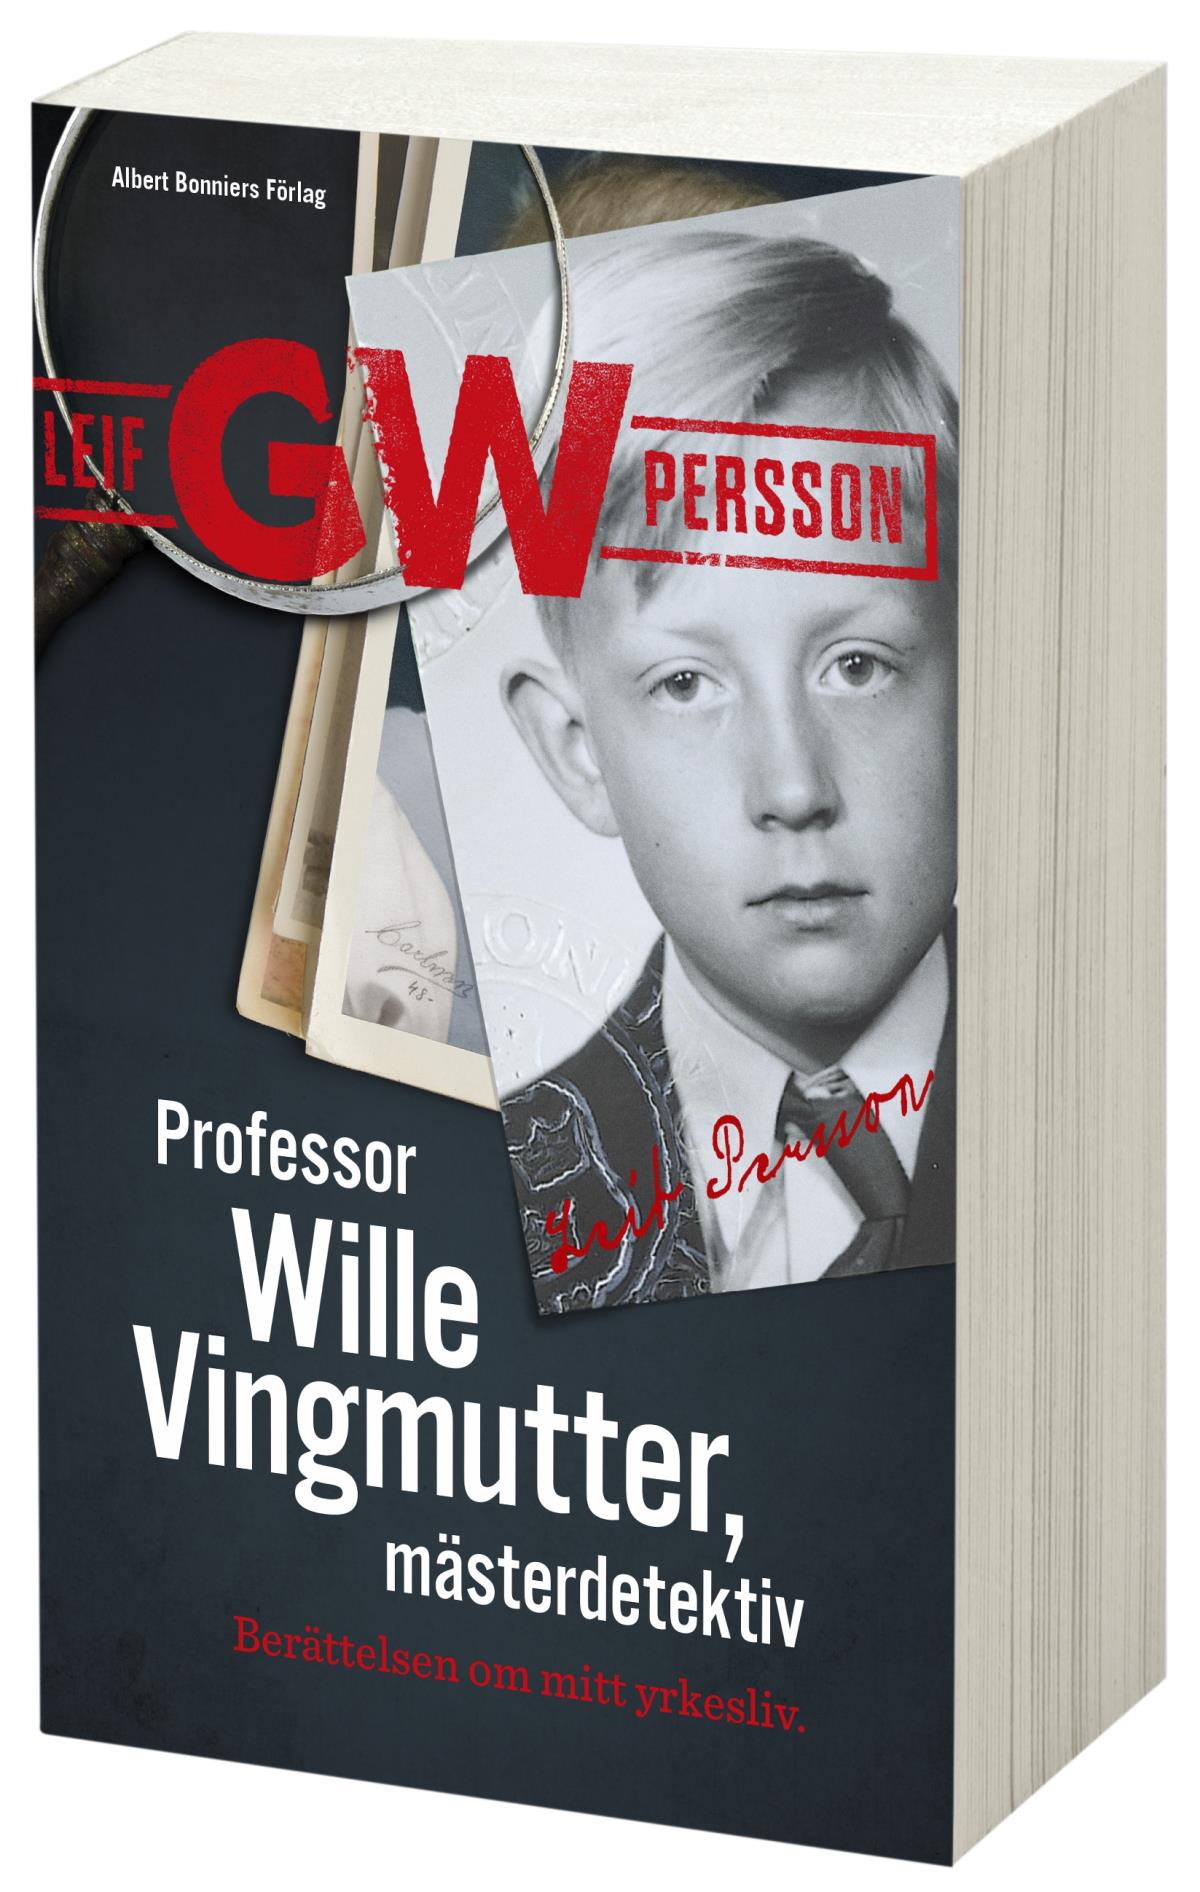 Professor Wille Vingmutter, Mästerdetektiv - Berättelsen Om Mitt Yrkesliv